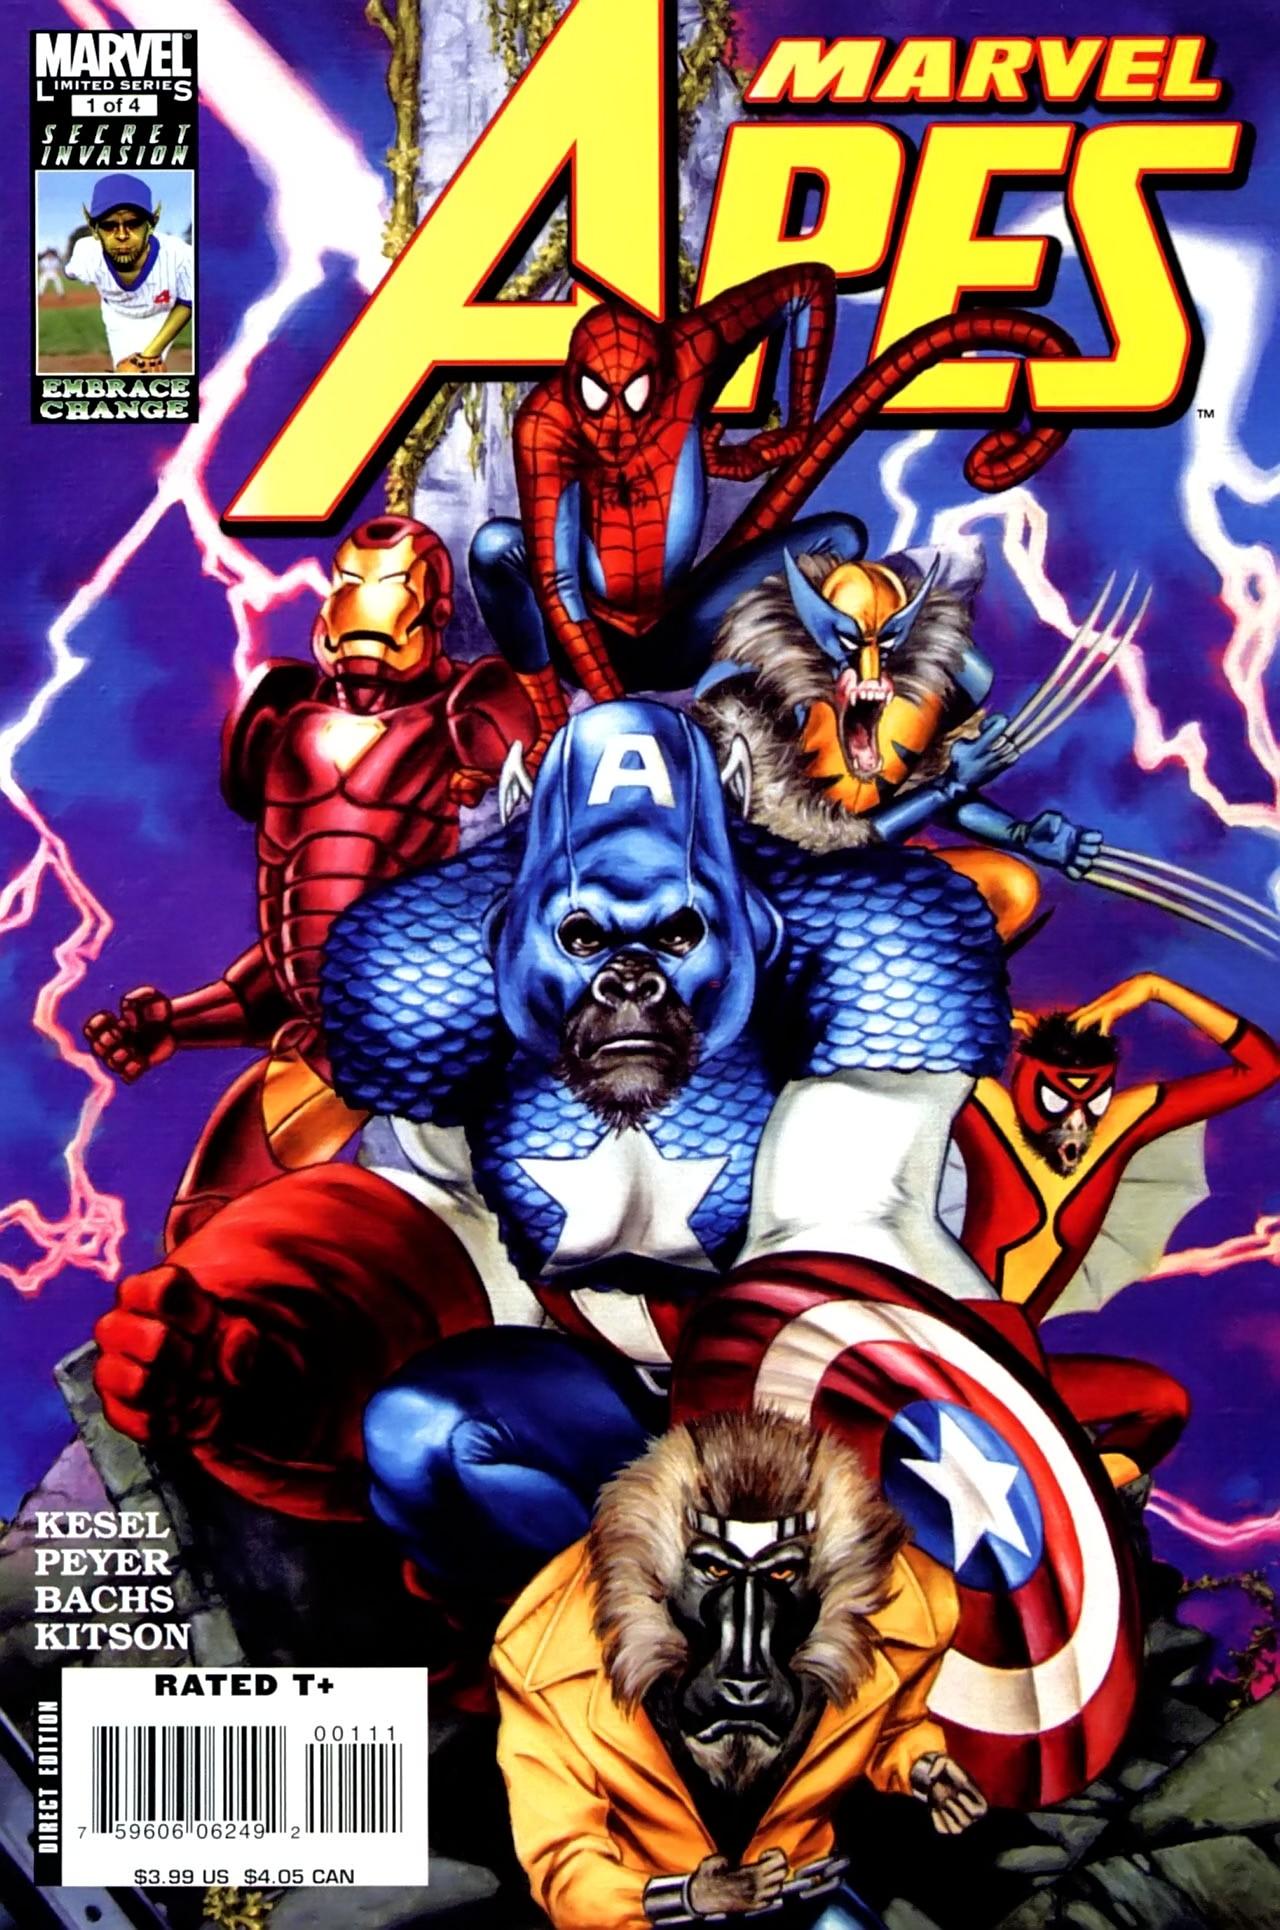 Marvel Apes Vol. 1 #1